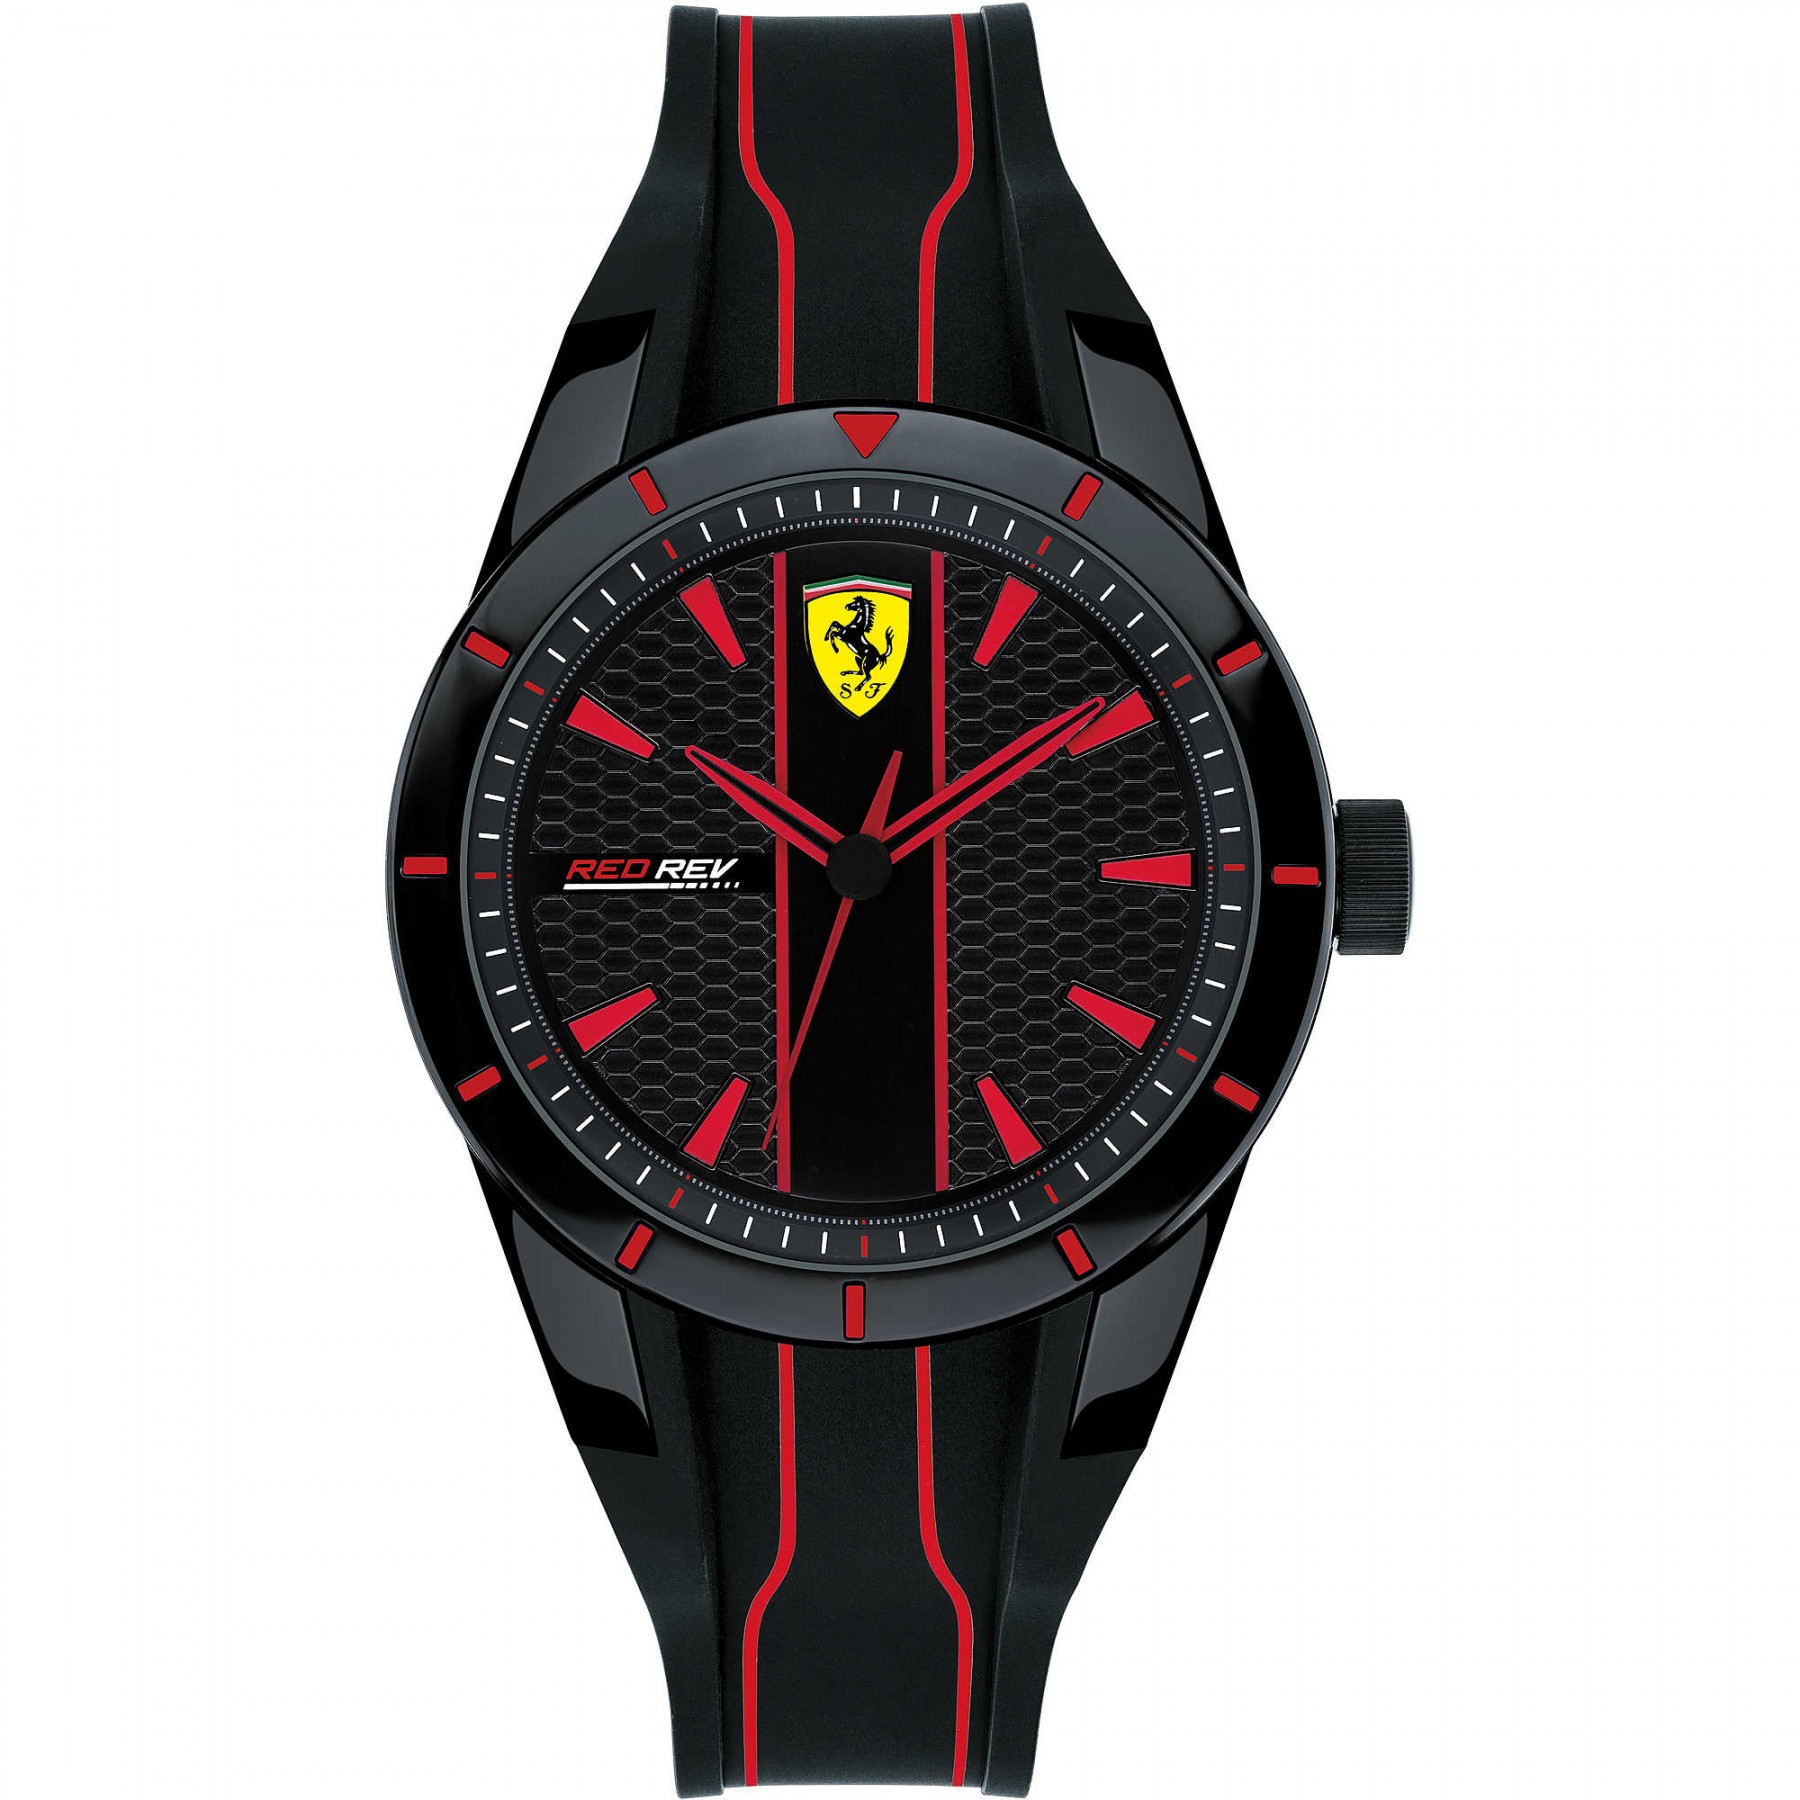 Ferrari часов. Часы Феррари Скудерия. Часы Феррари Scuderia Ferrari 2019. Часы Ferrari SF 1.34 00 15. Swiss made часы Феррари.